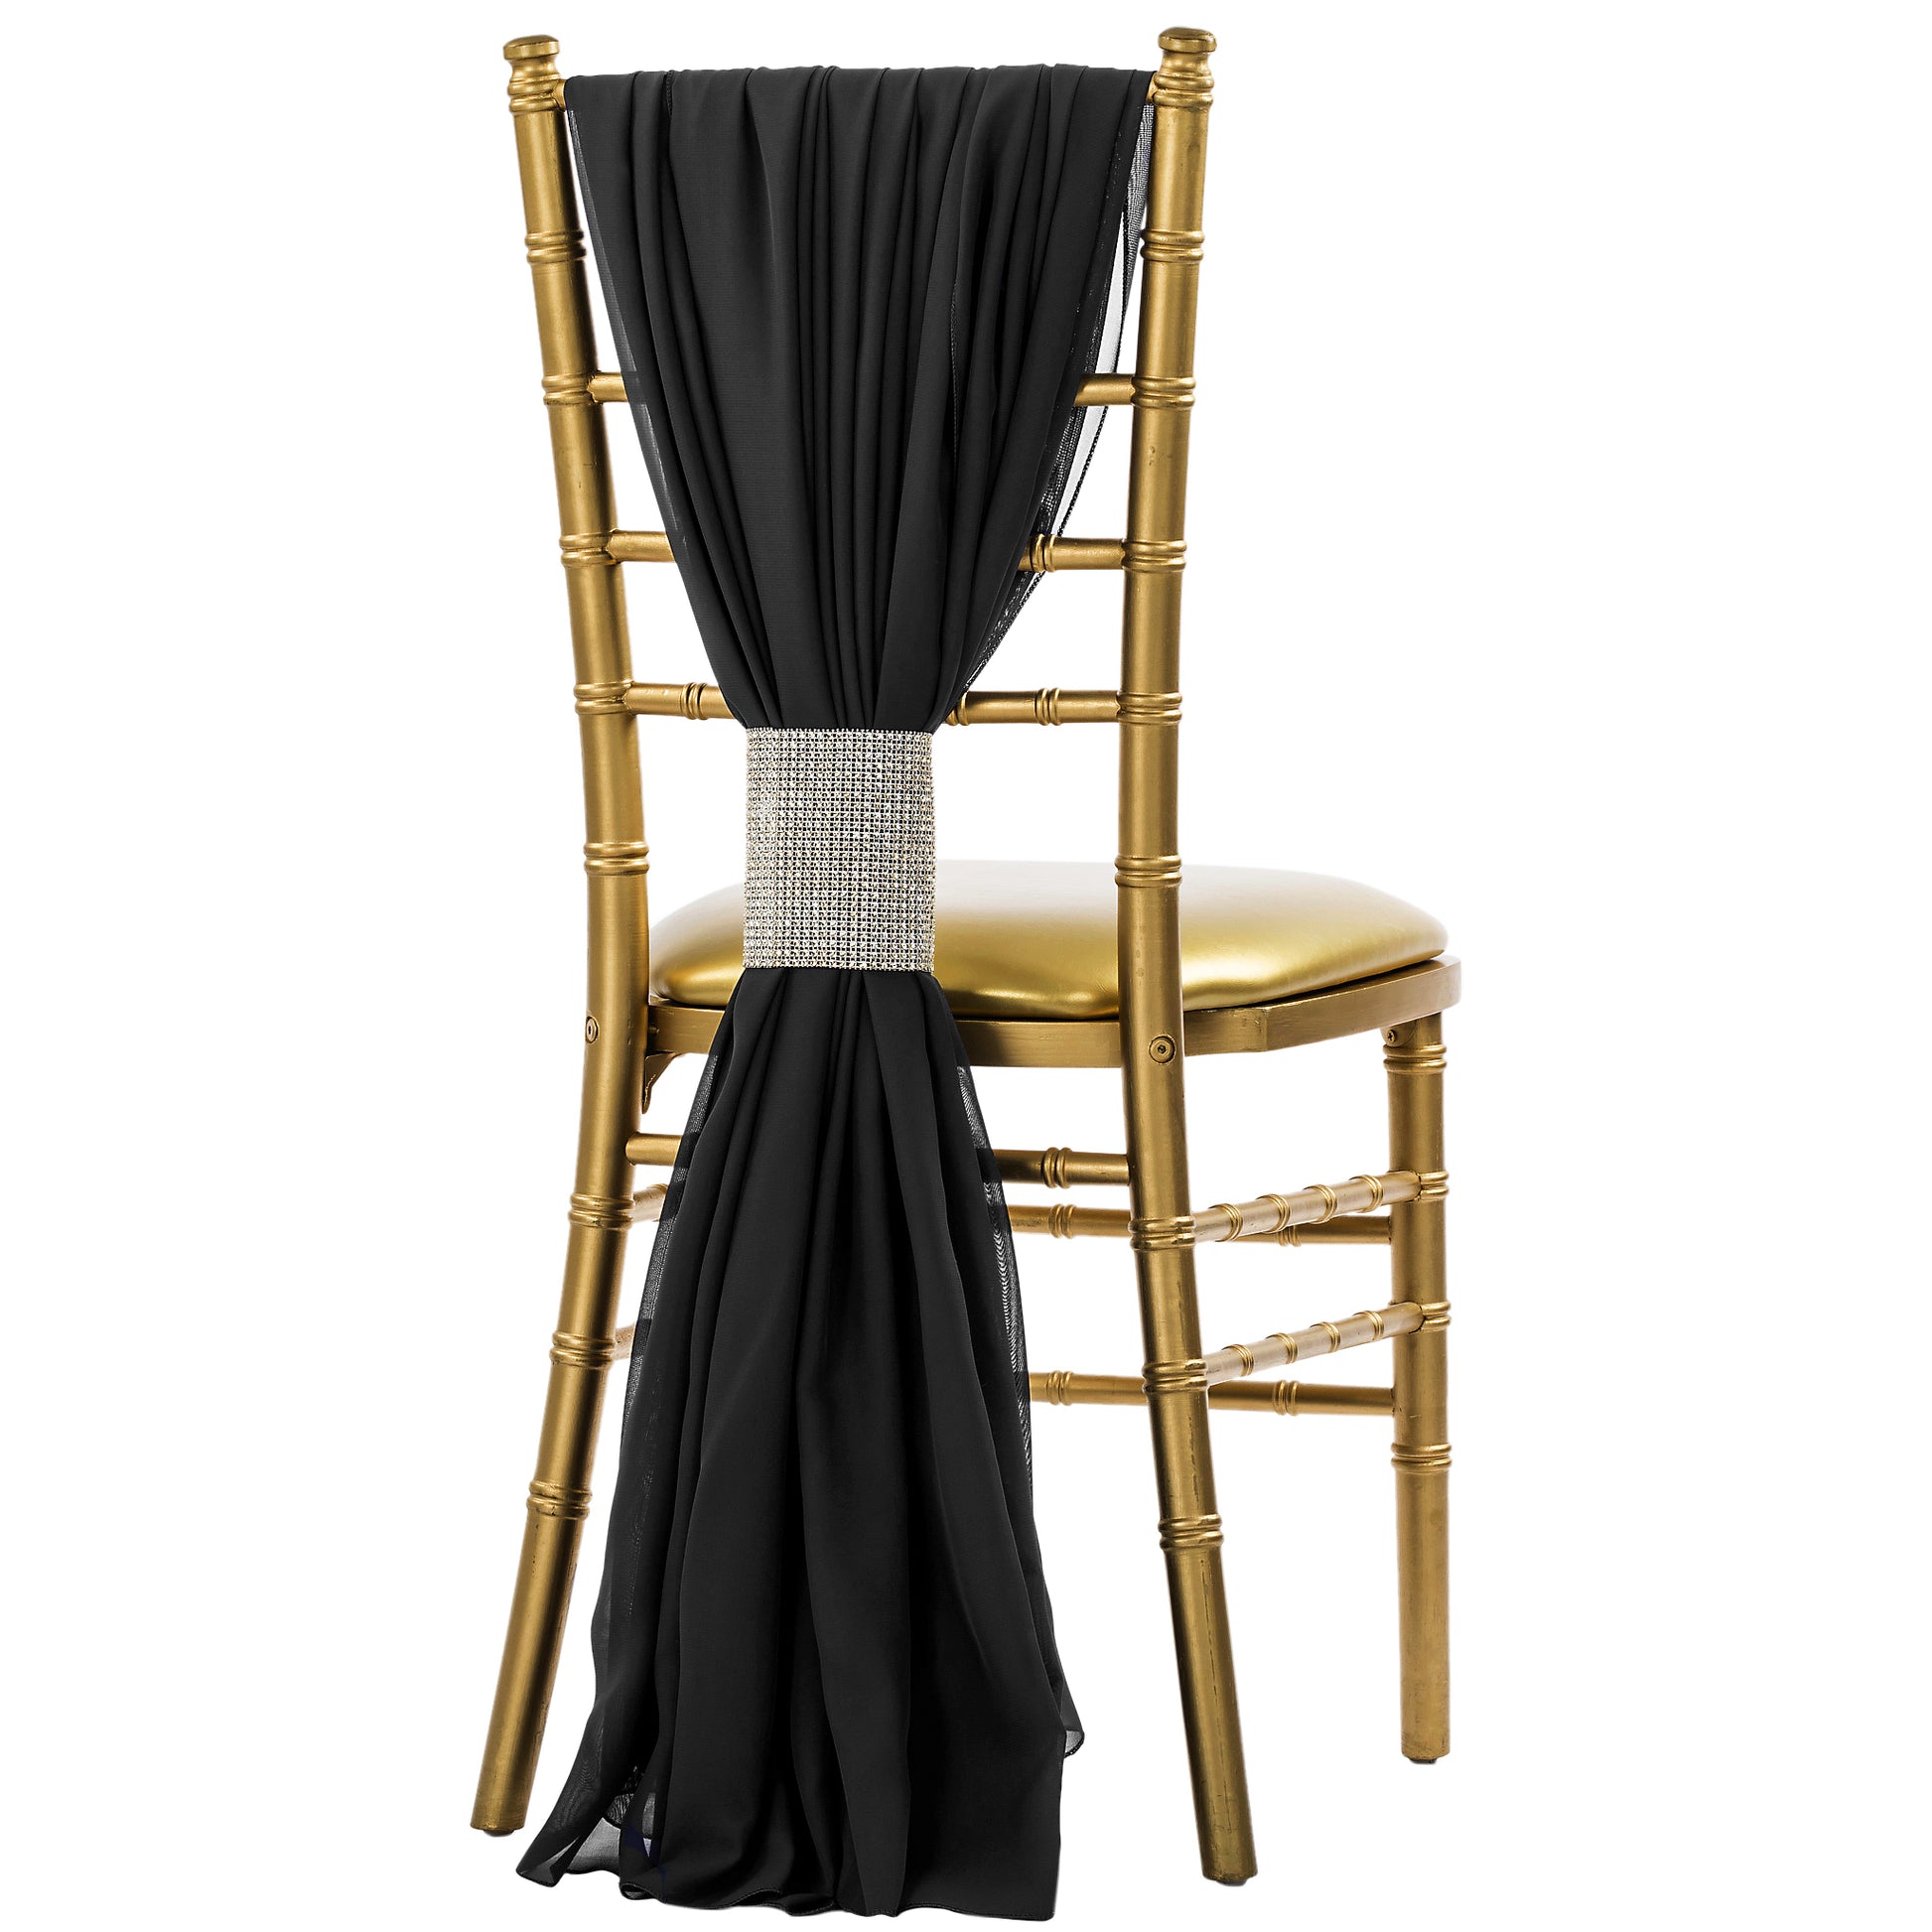 5pcs Pack of Chiffon Chair Sashes/Ties 19 x 72 - Black